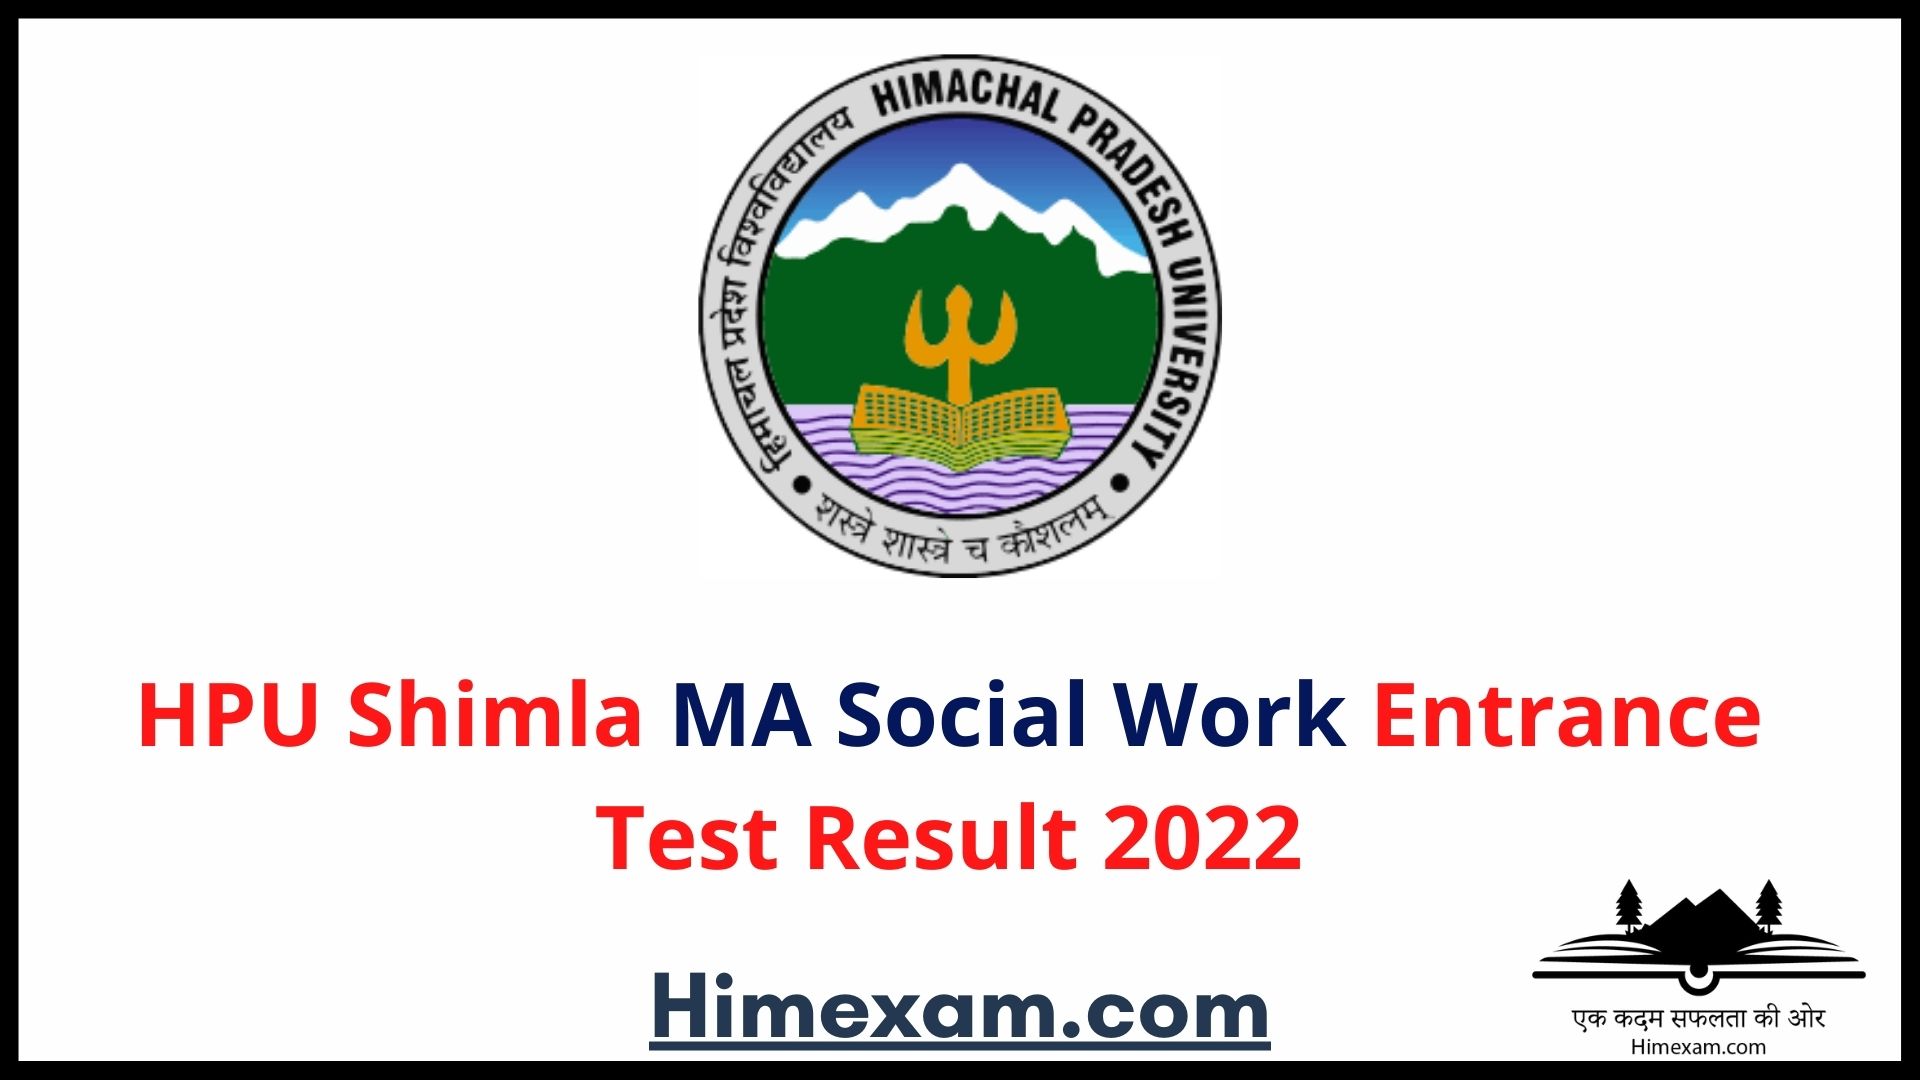 HPU Shimla MA Social Work Entrance Test Result 2022